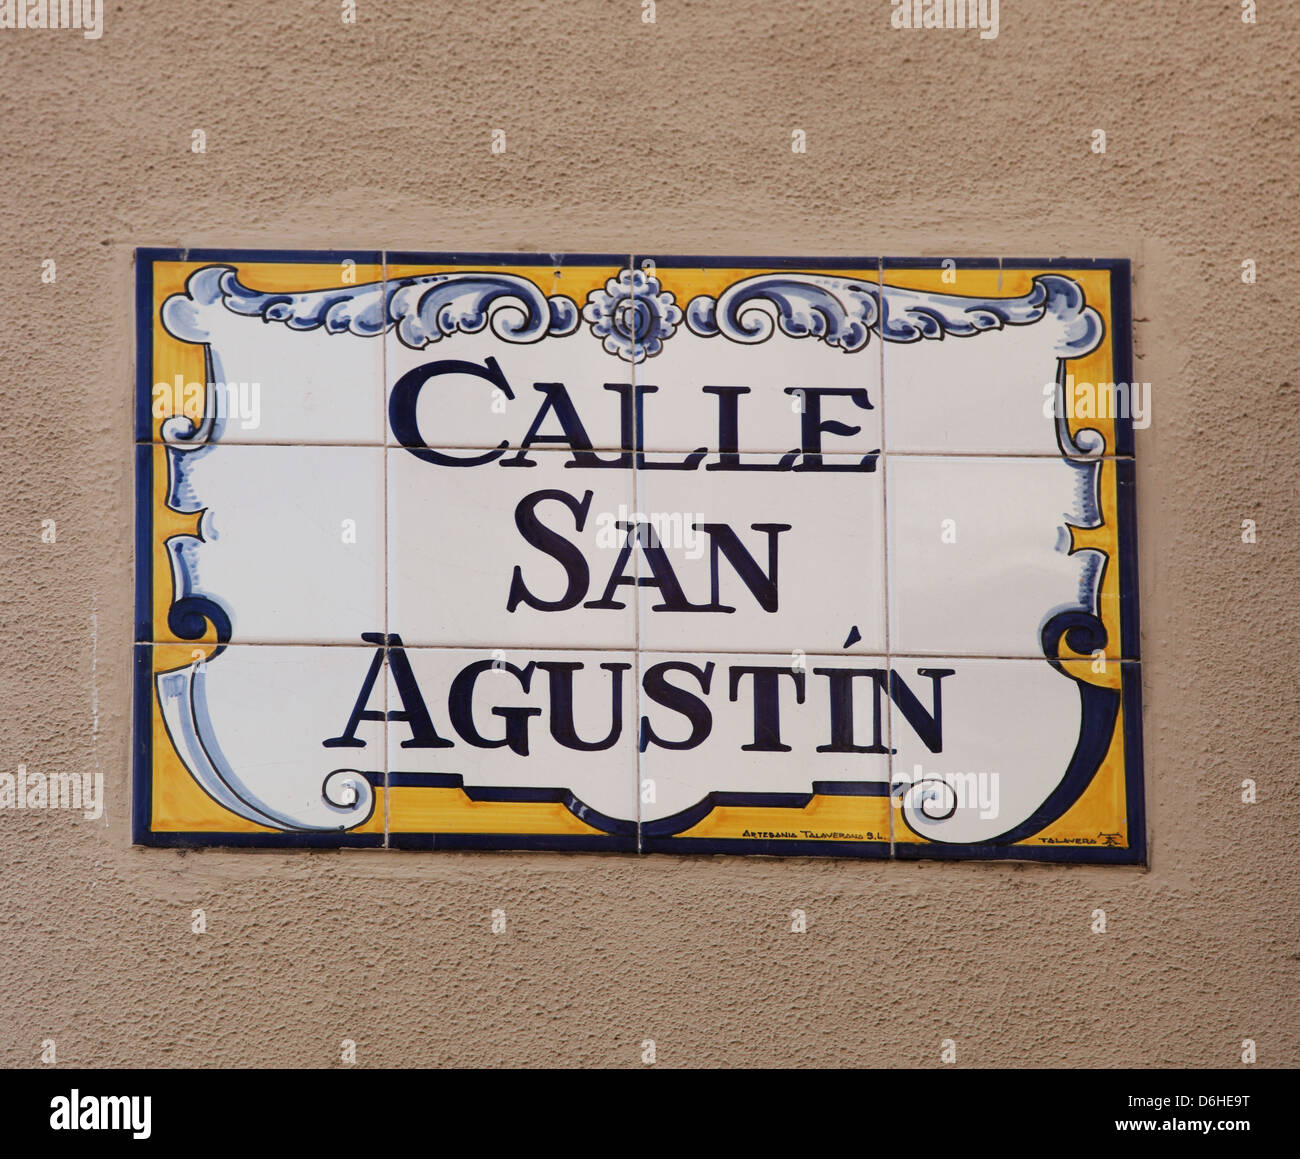 Calle San Agustin street sign by Talavera Stock Photo